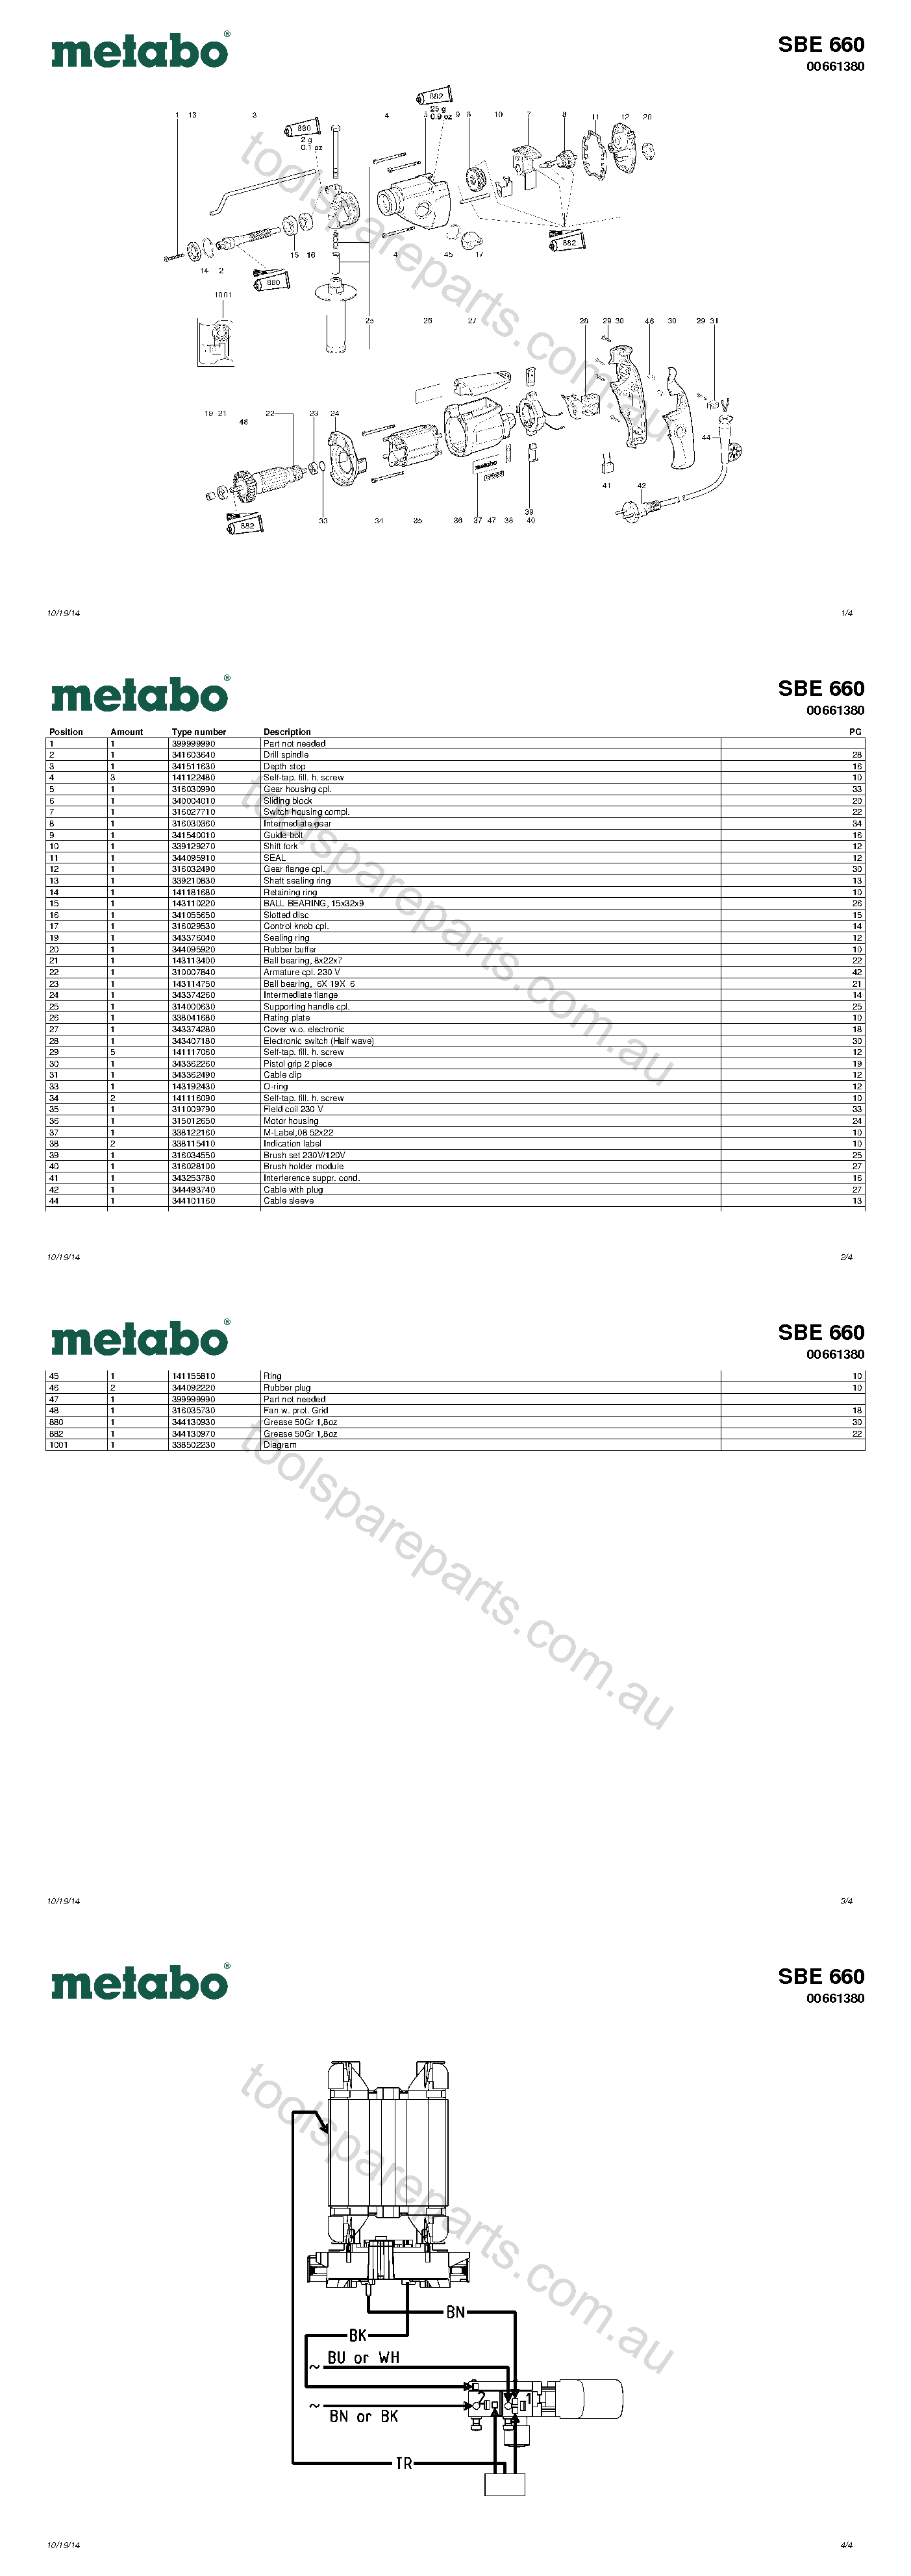 Metabo SBE 660 00661380  Diagram 1